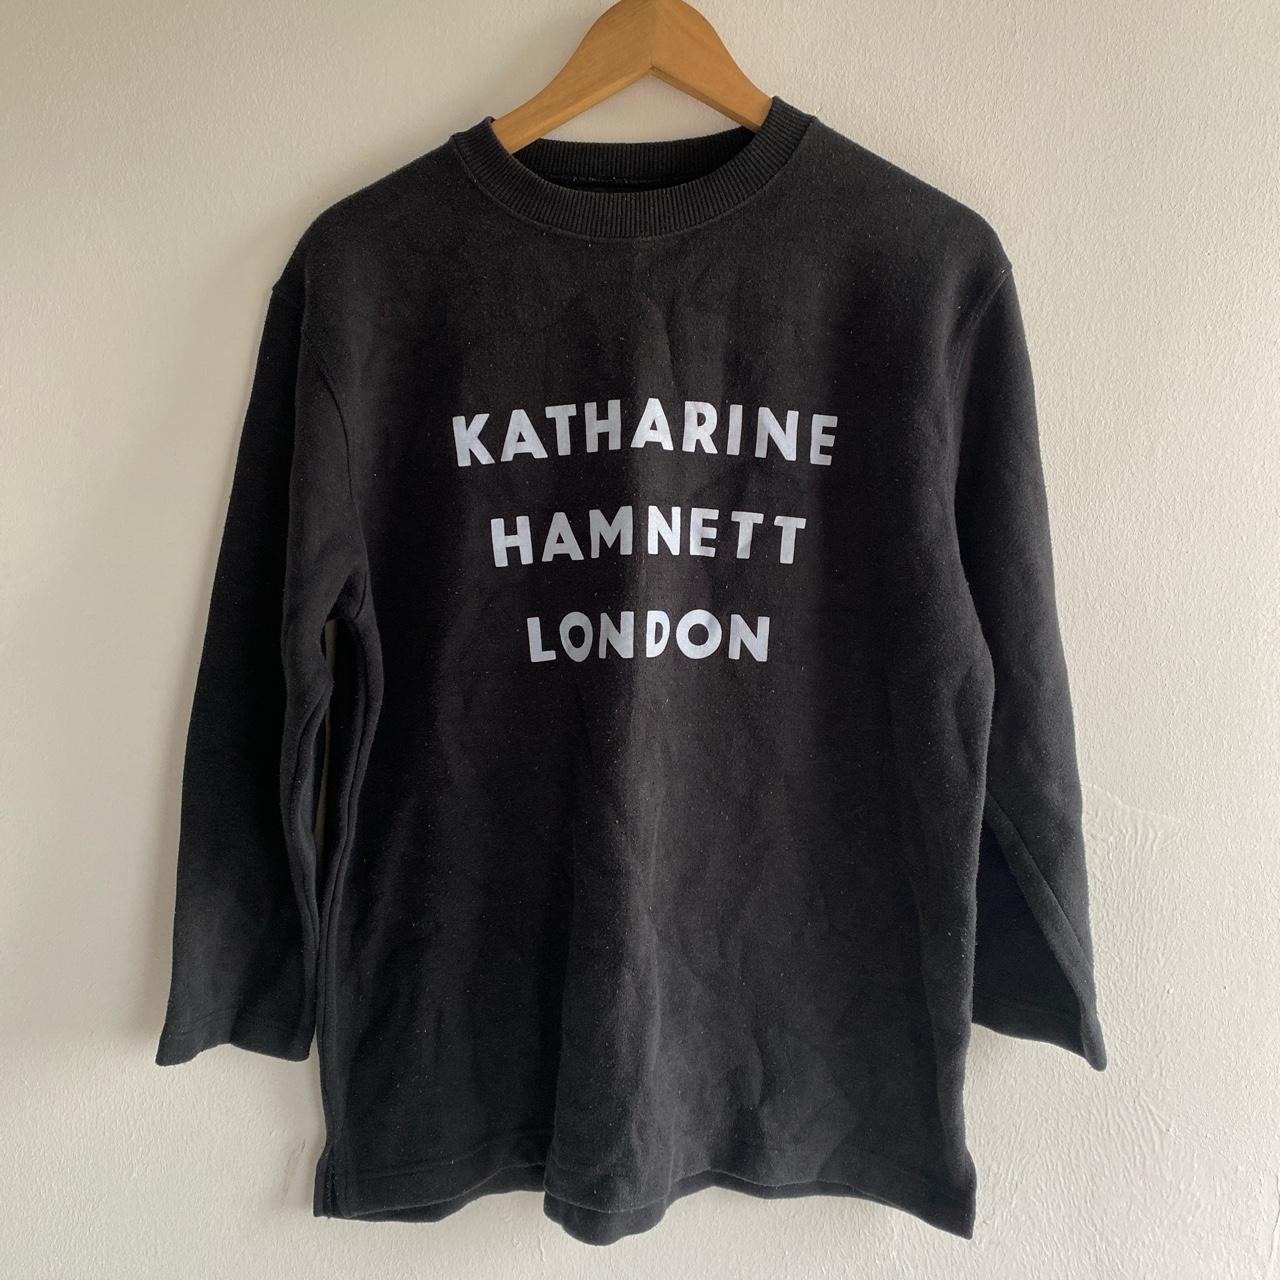 Katharine Hamnett London Sweatshirt, Pit 21”, Length